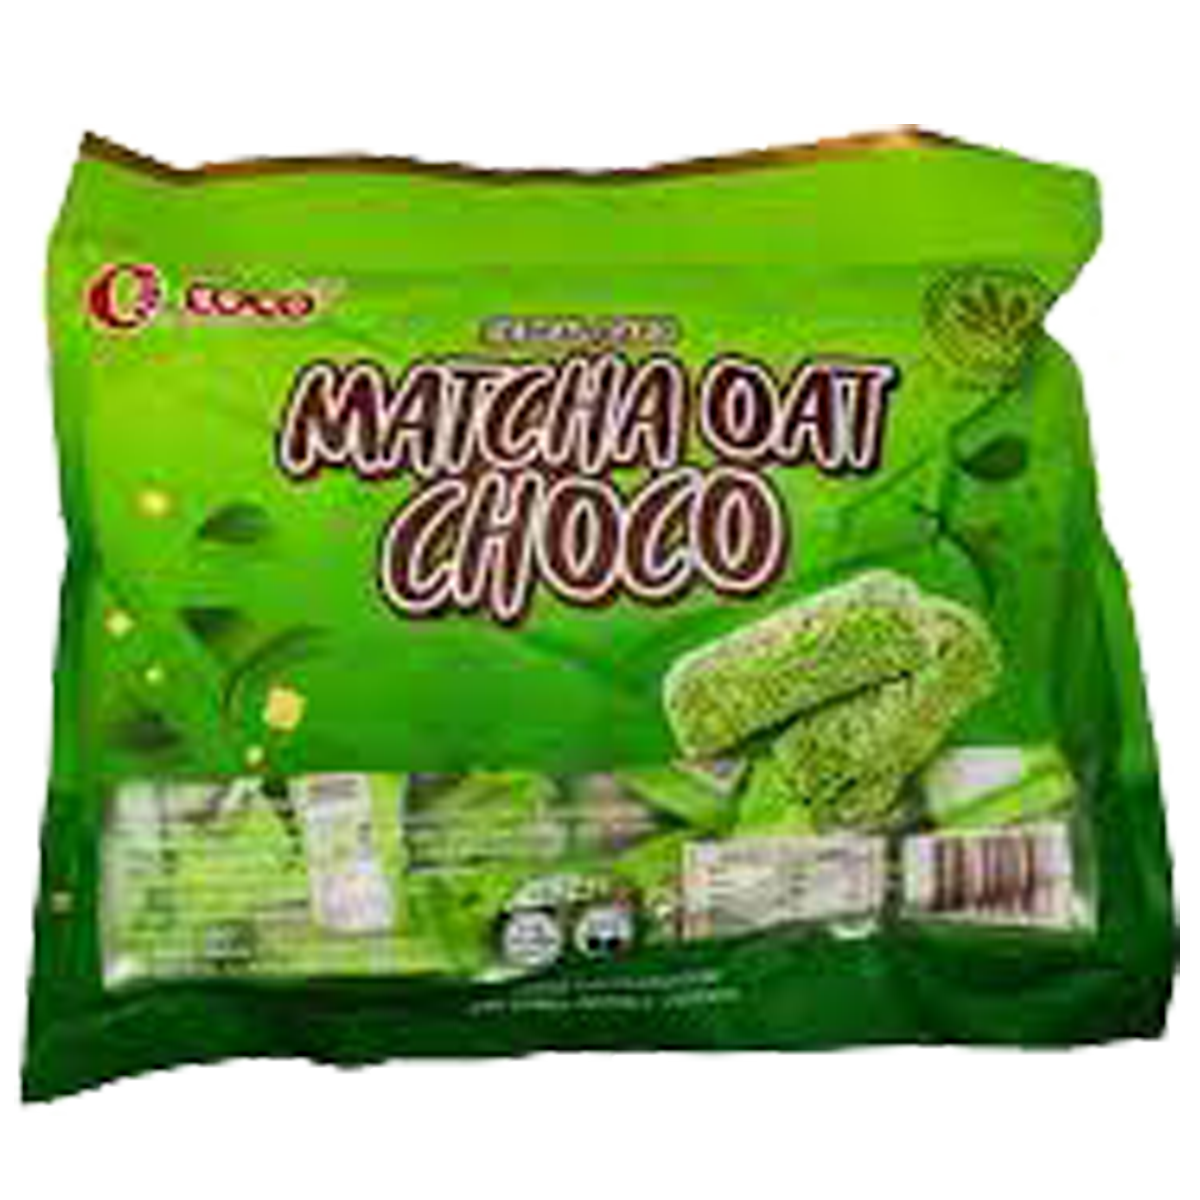 COCO Oat Choco (Matcha) 400 grams